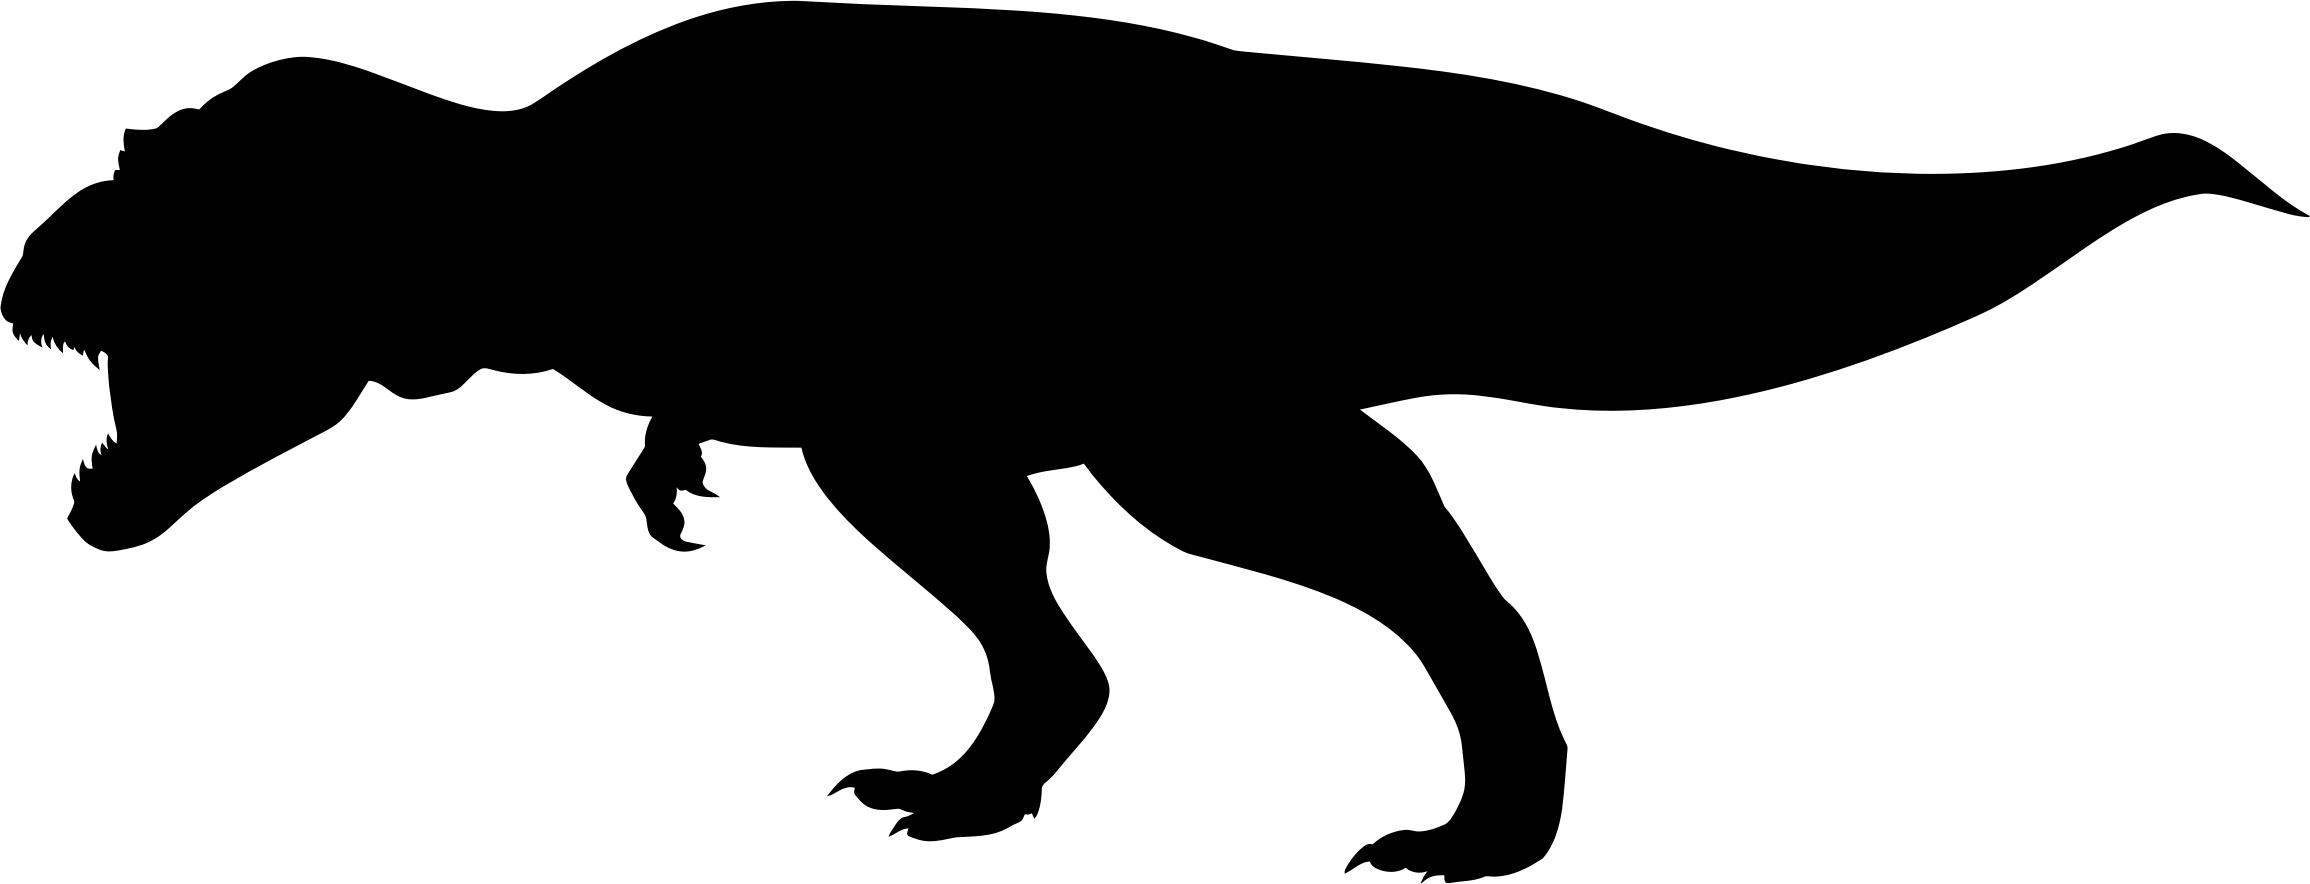 Tyrannosaurus Rex Silhouette icons